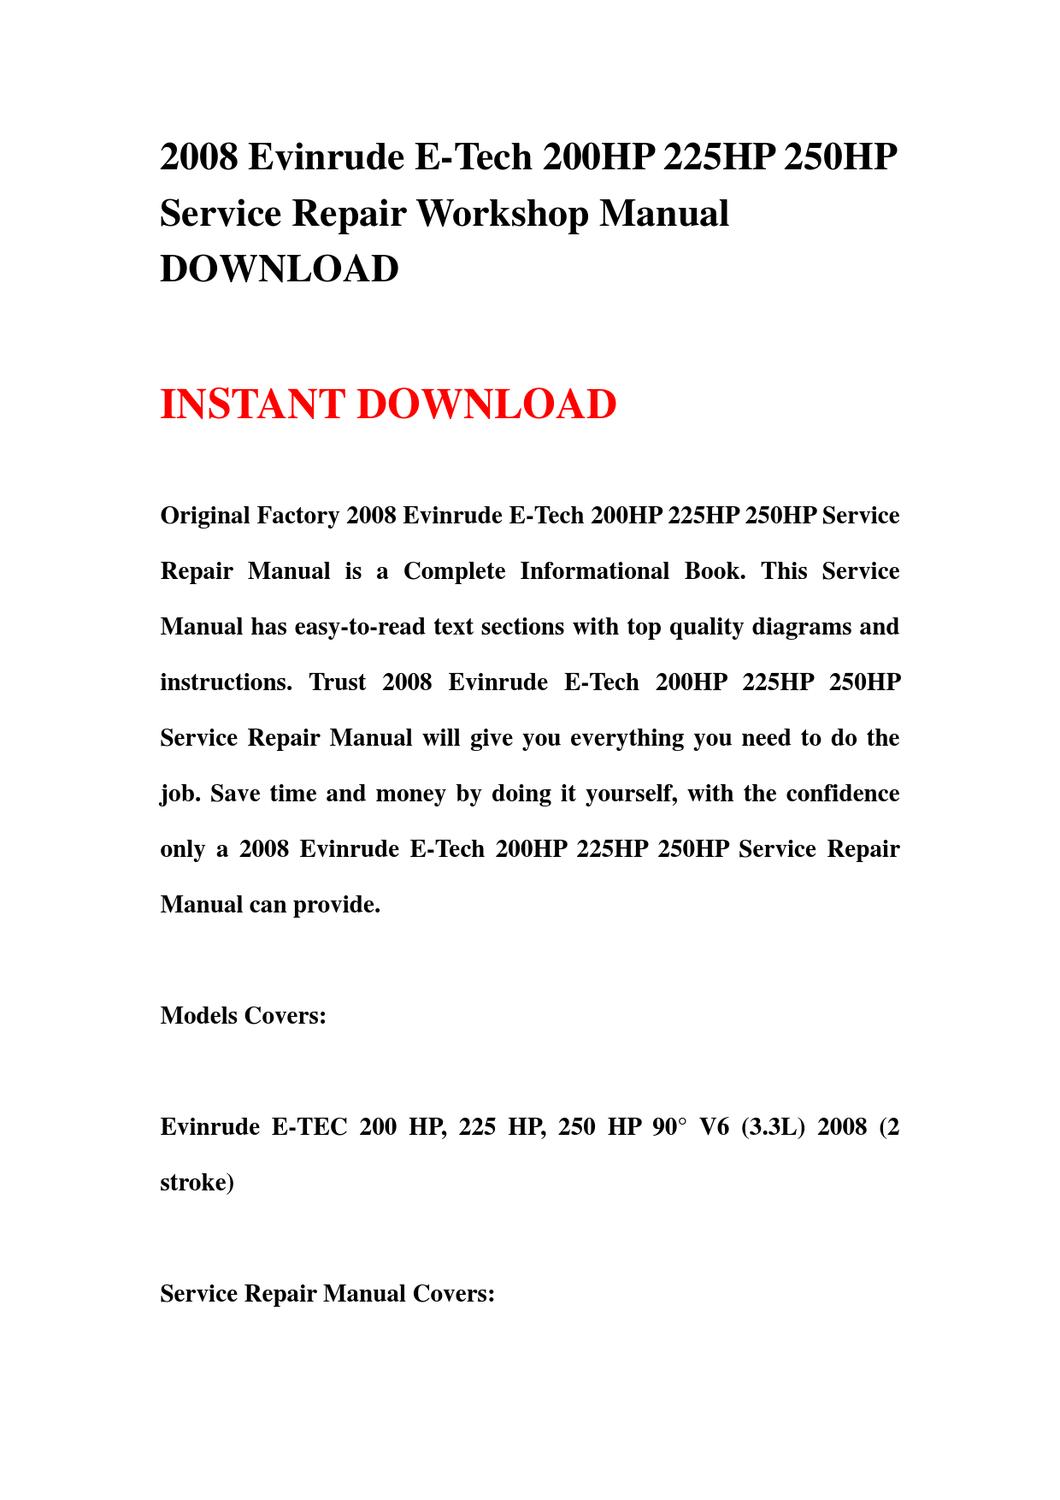 Free Evinrude Service Manual Download